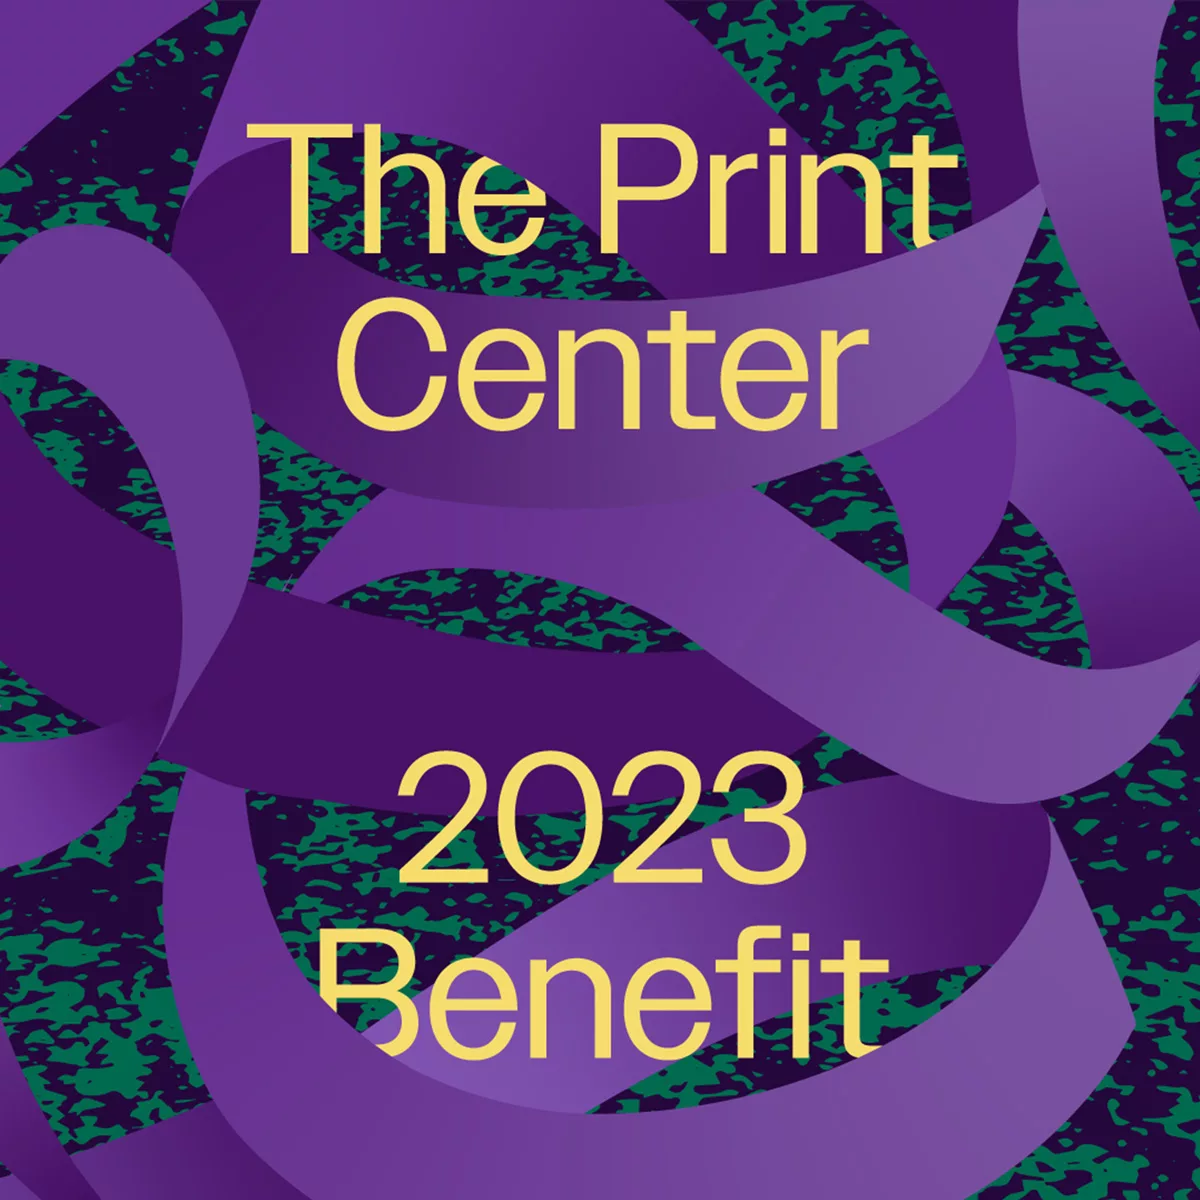 The Print Center 2023 Benefit